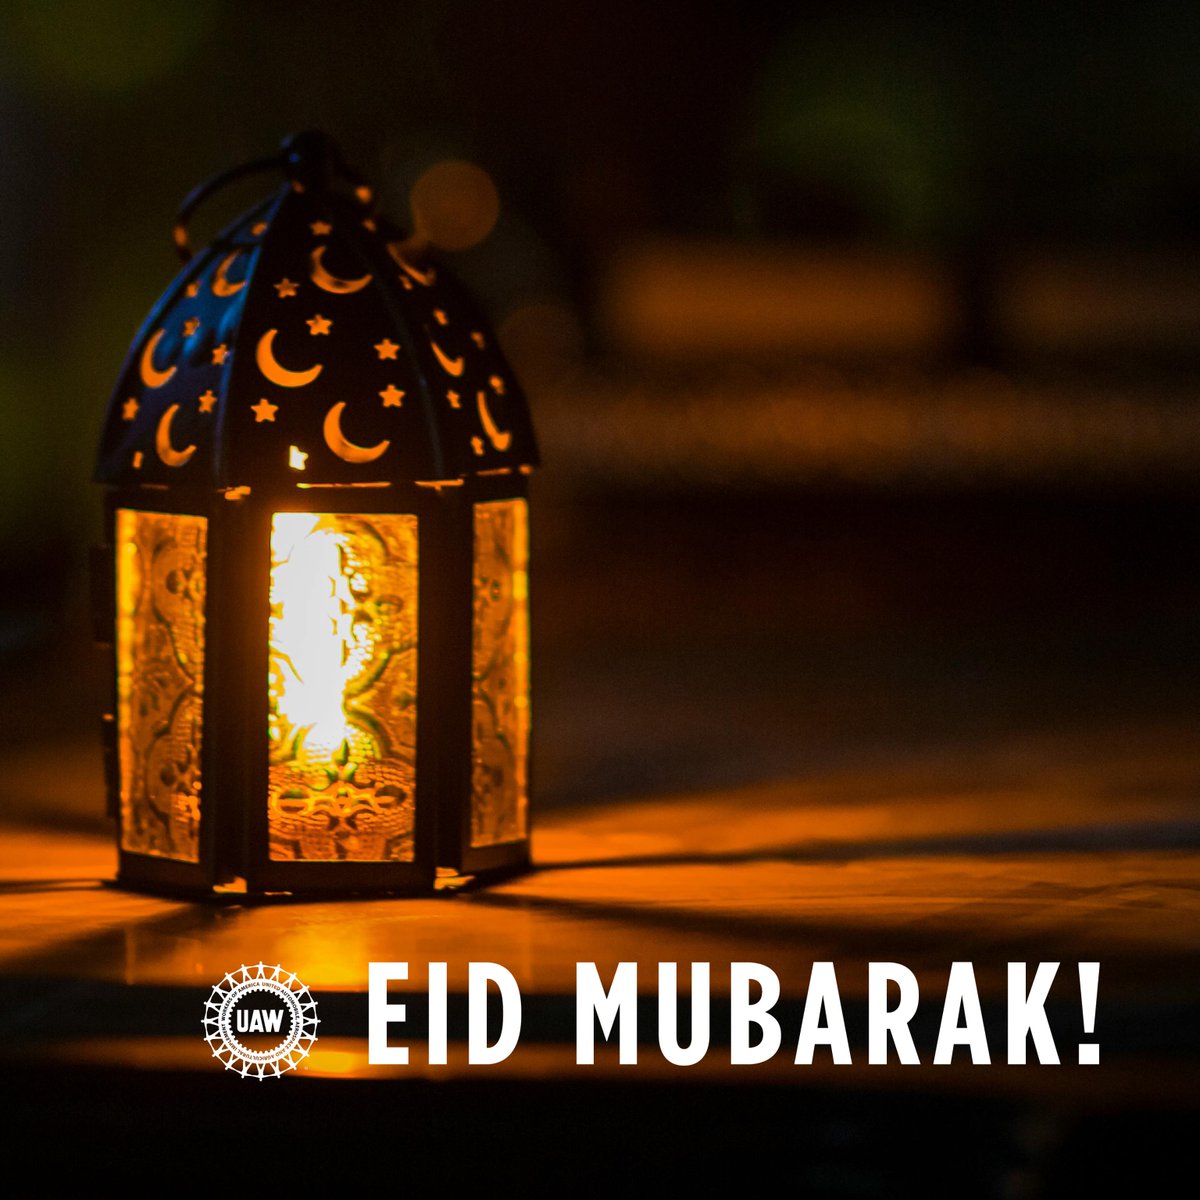 Eid Mubarak! 🌙✨ May this Eid bring you peace, happiness, and blessings! #EidMubarak #UAW